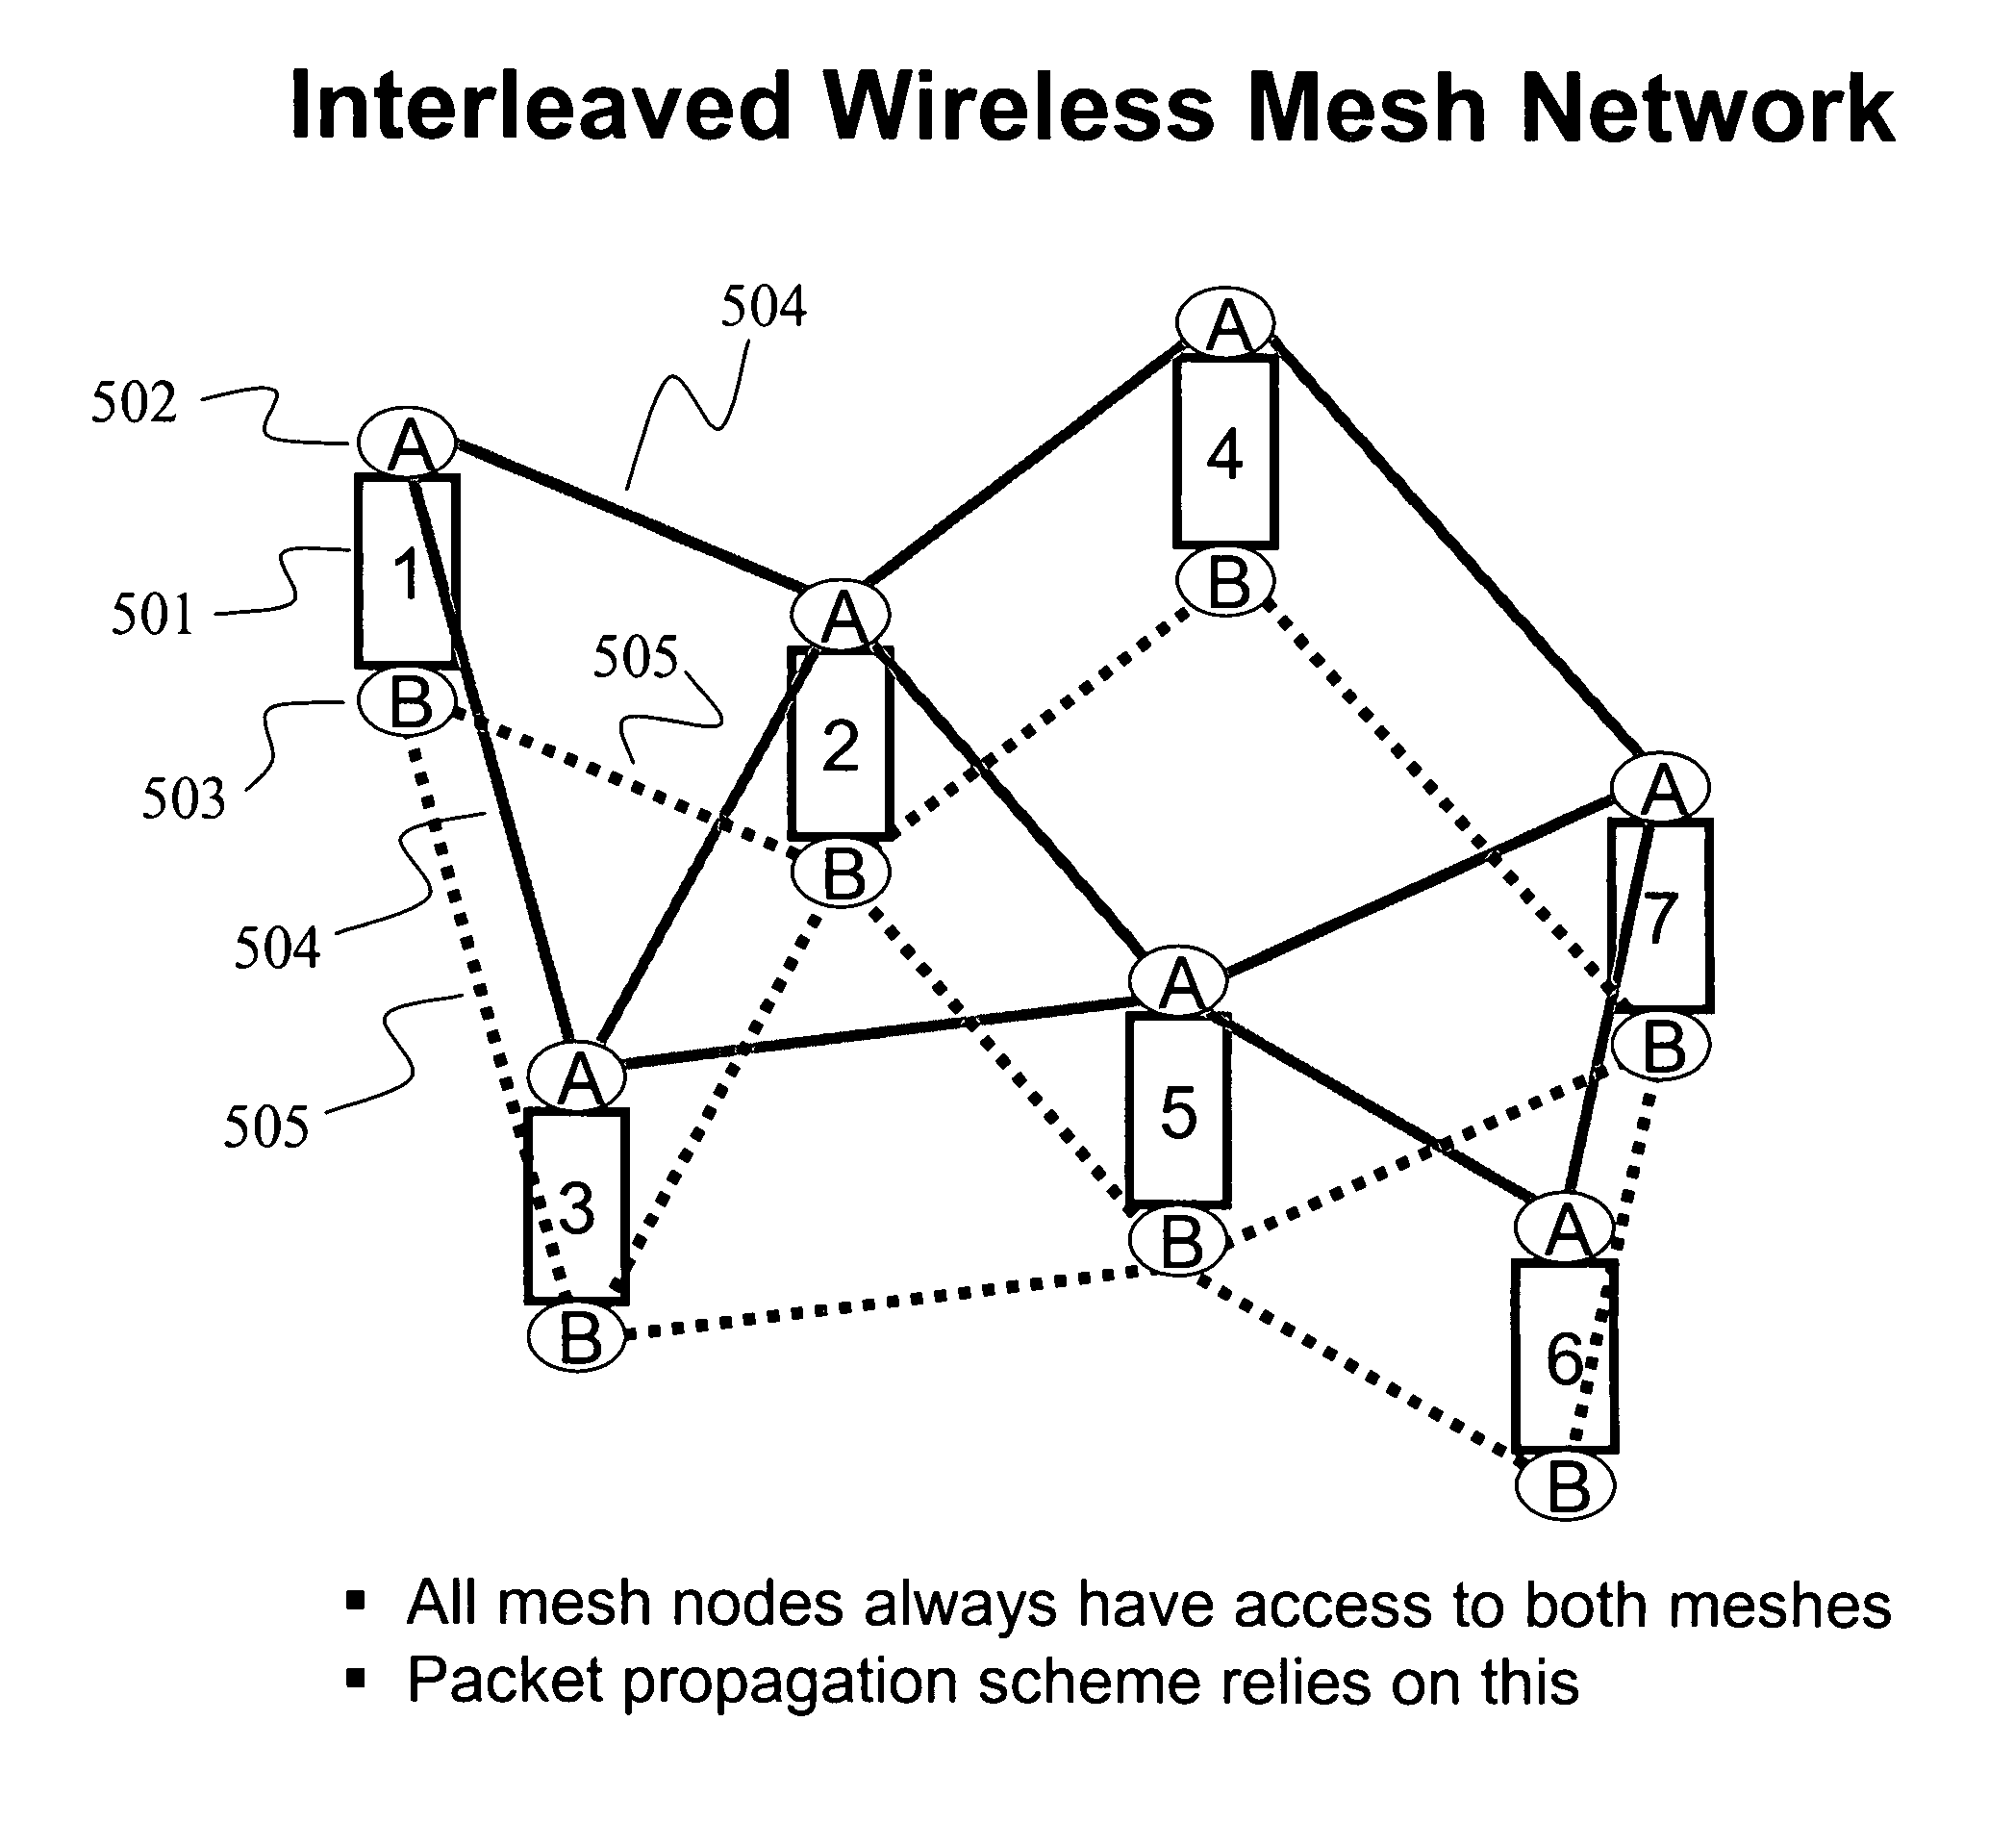 Interleaved wireless mesh network